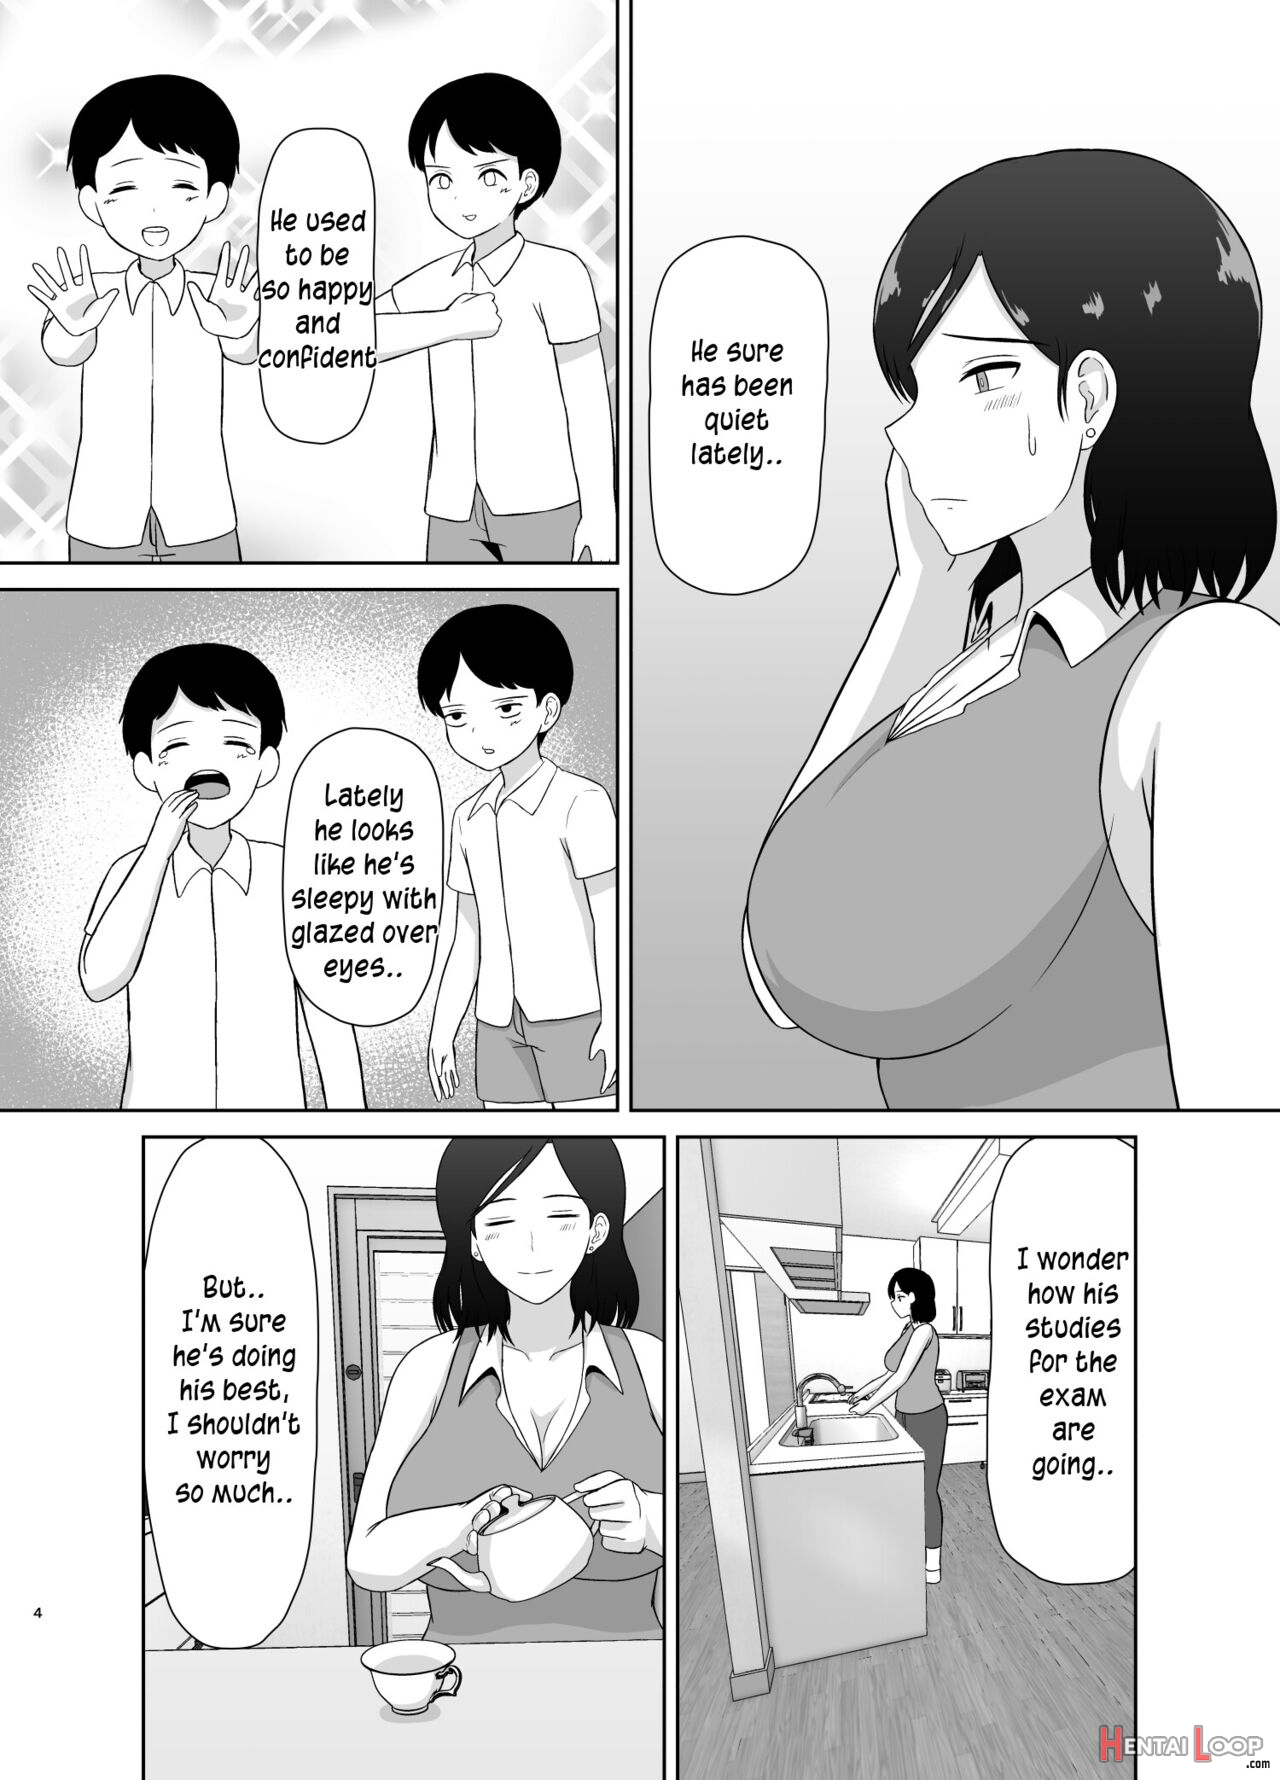 Sex Education Mama page 4